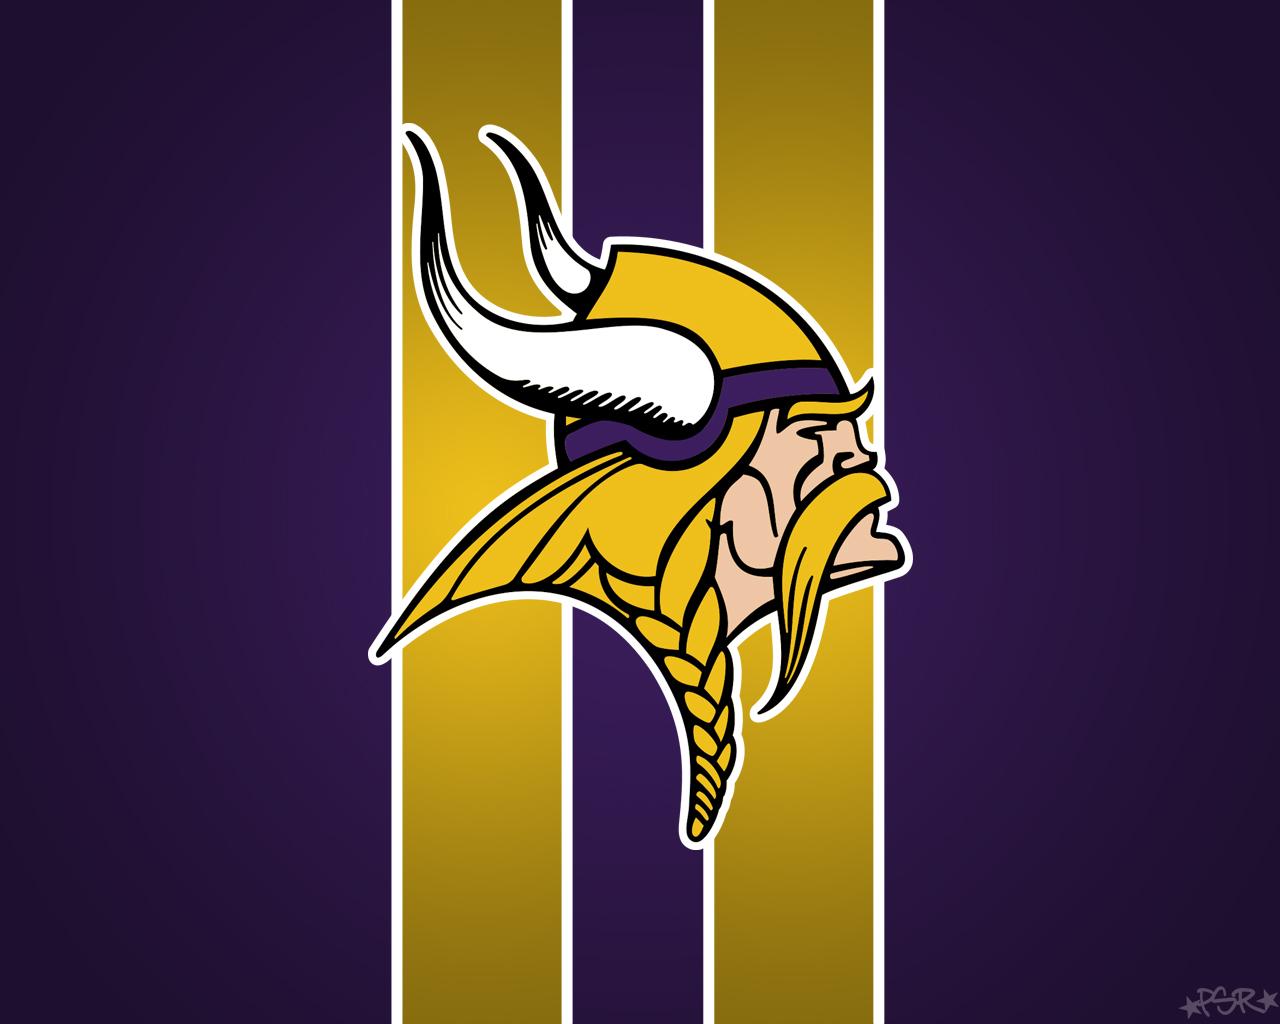 Minnesota Vikings at 1280 x 960 size wallpapers HD quality